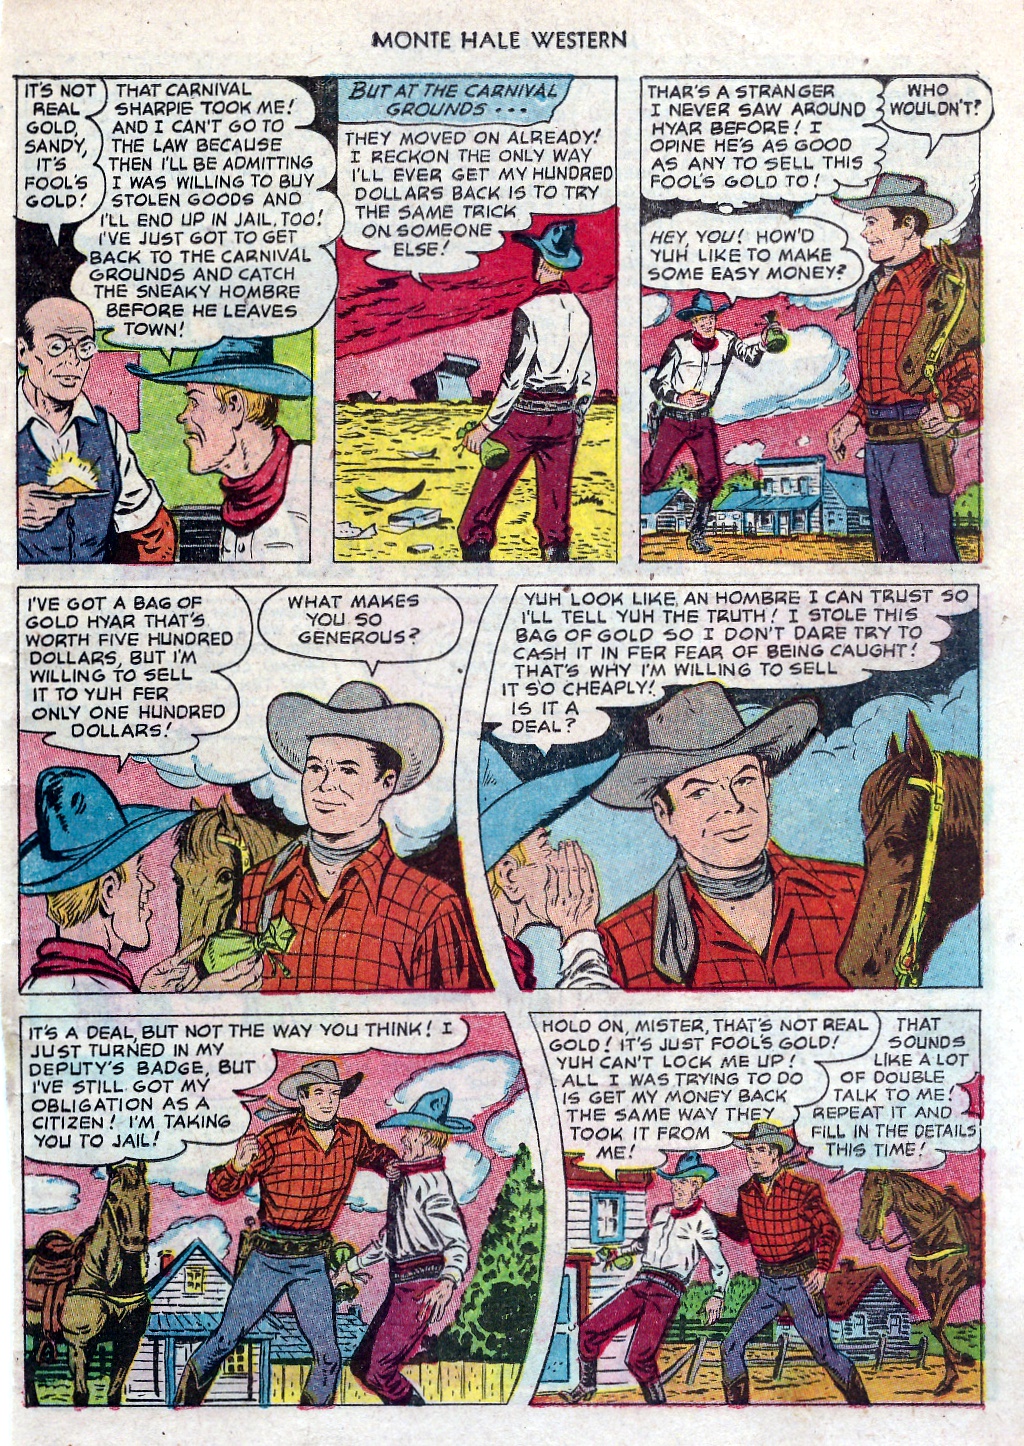 Read online Monte Hale Western comic -  Issue #82 - 11